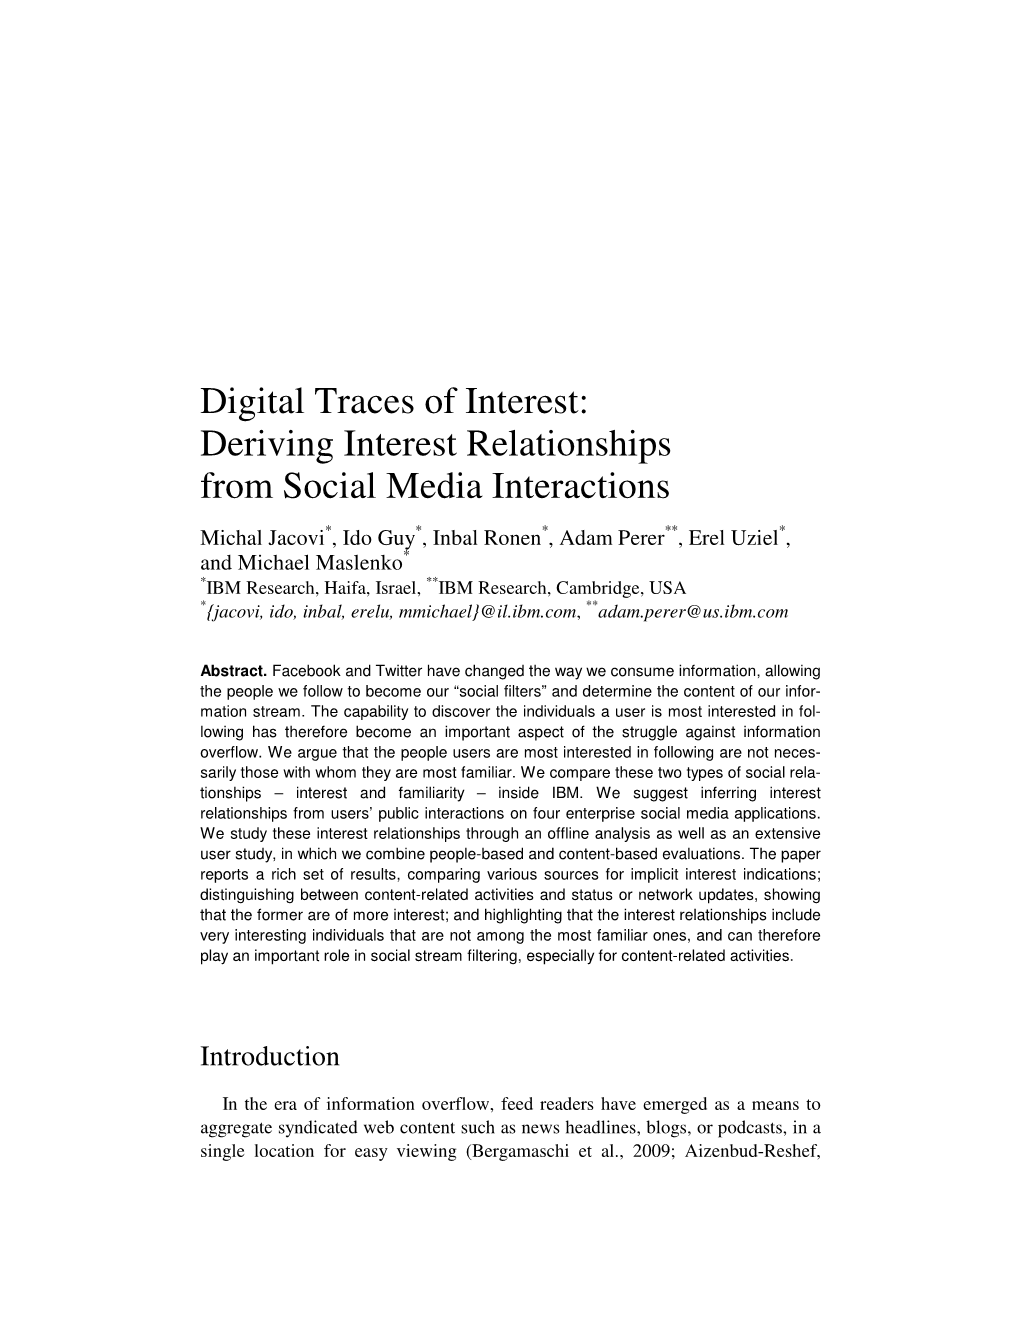 Deriving Interest Relationships from Social Media Interactions